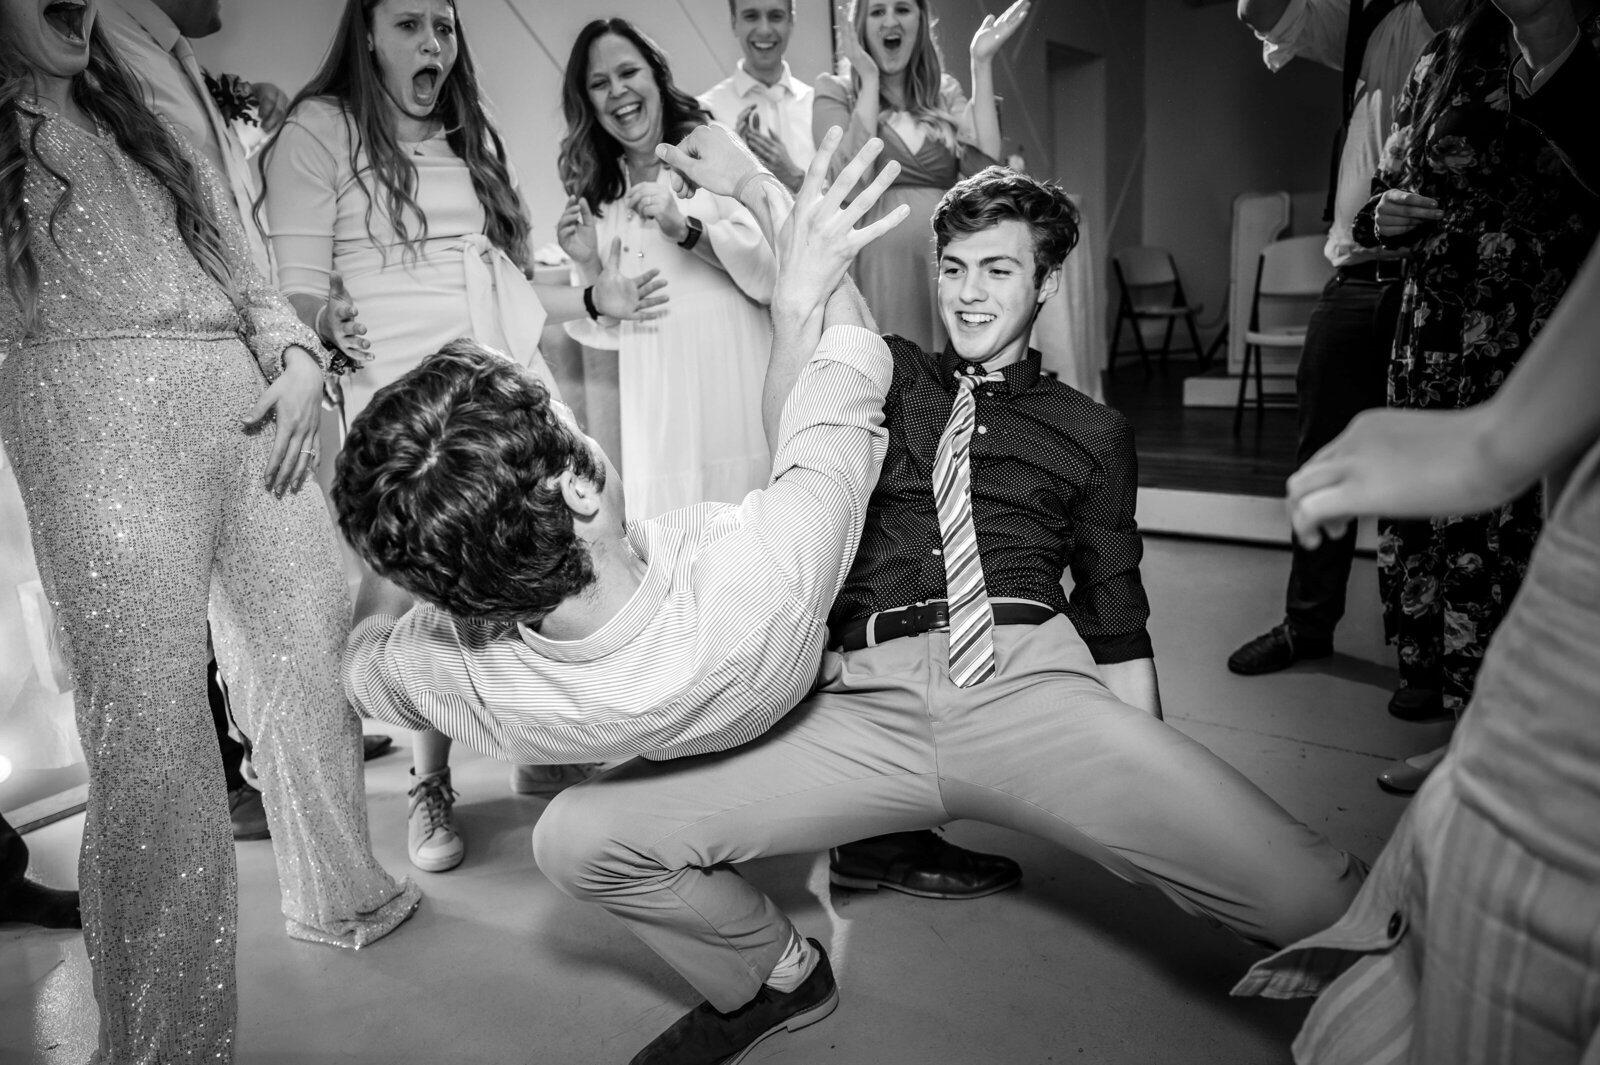 Fun dancing during wedding reception